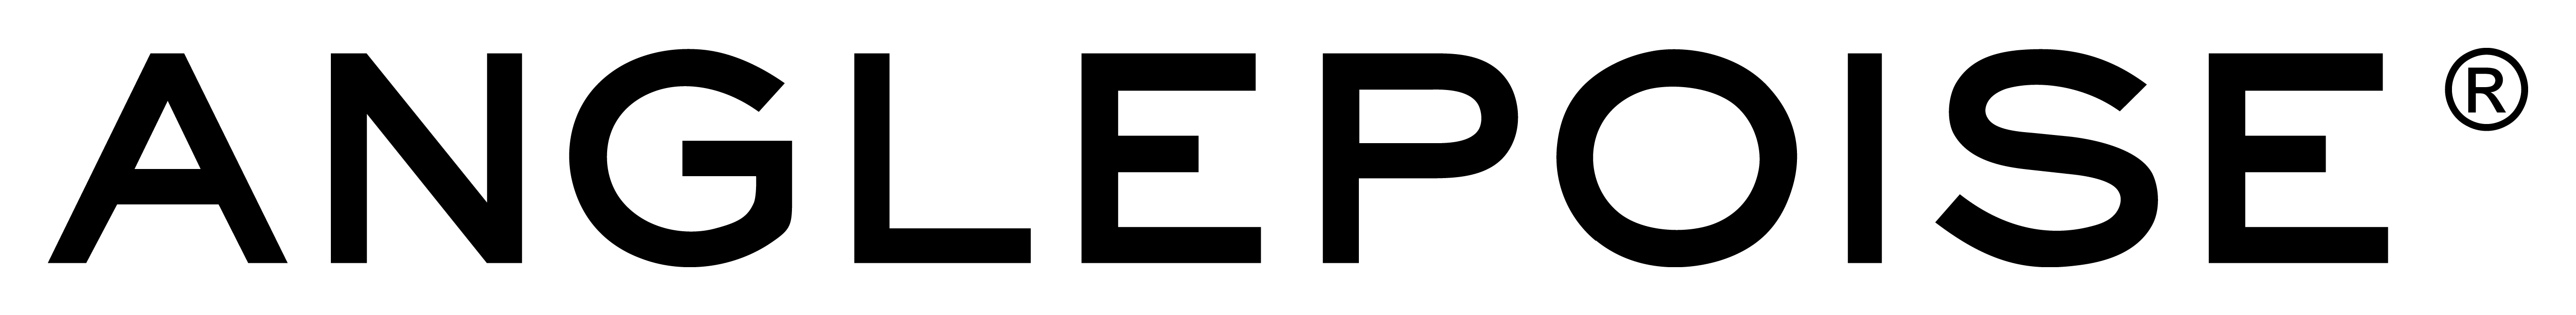 Anglepoise logo